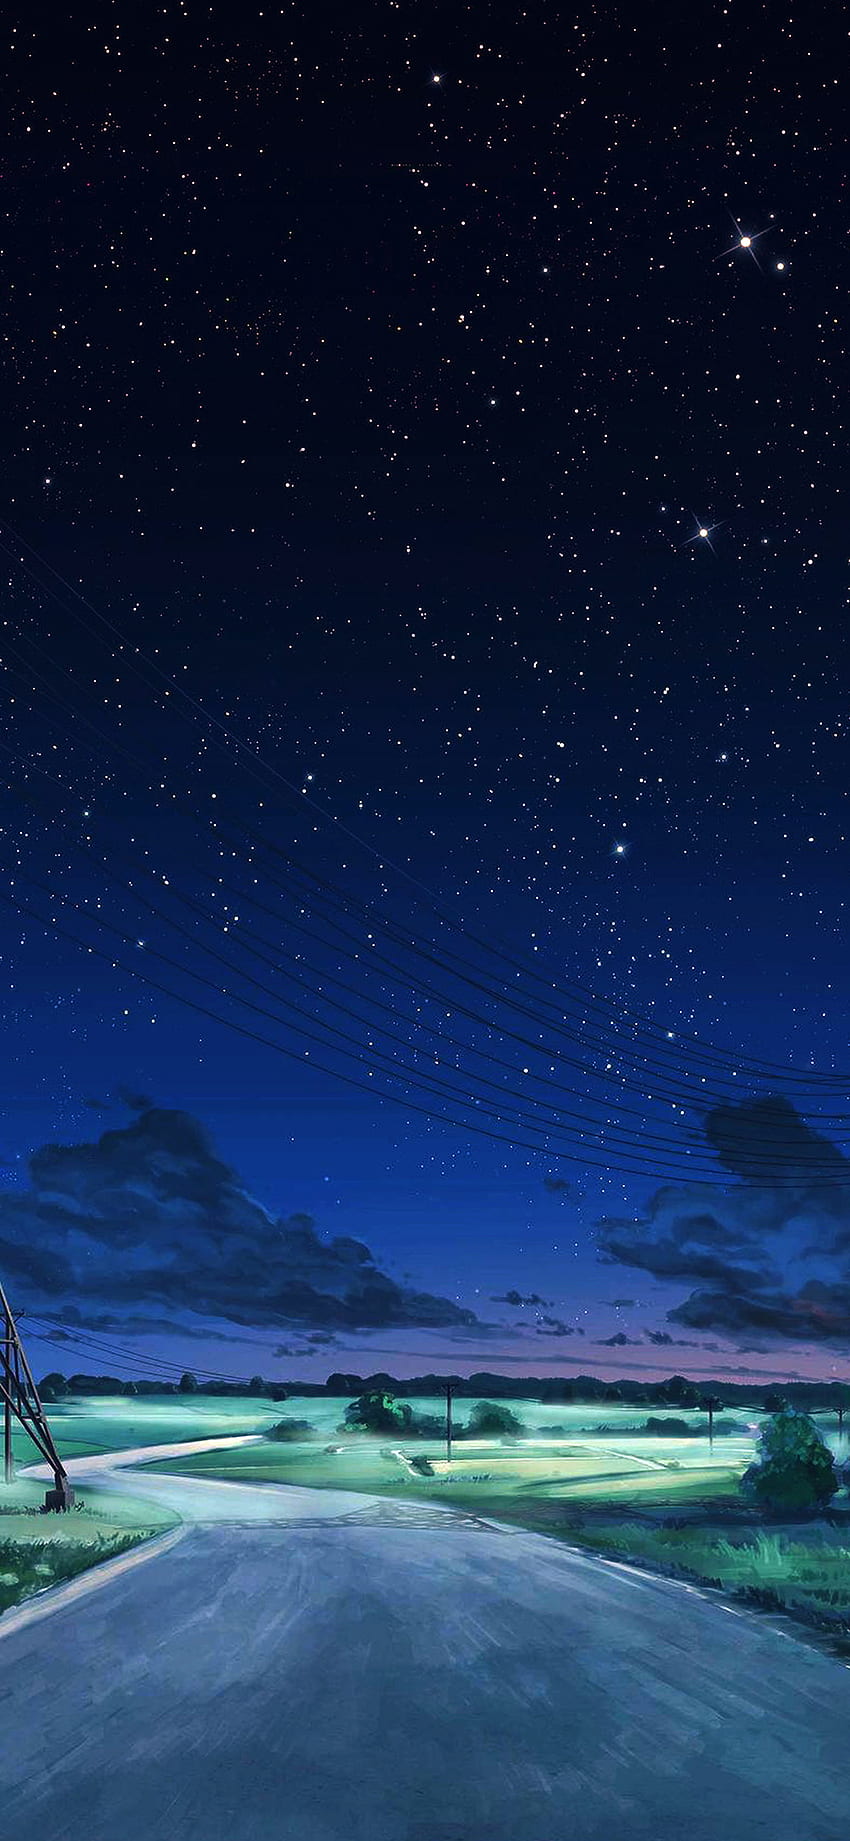 iPhoneX. arseniy chebynkin night sky star blue illustration art anime oscuro, Cielo azul y estrellas fondo de pantalla del teléfono